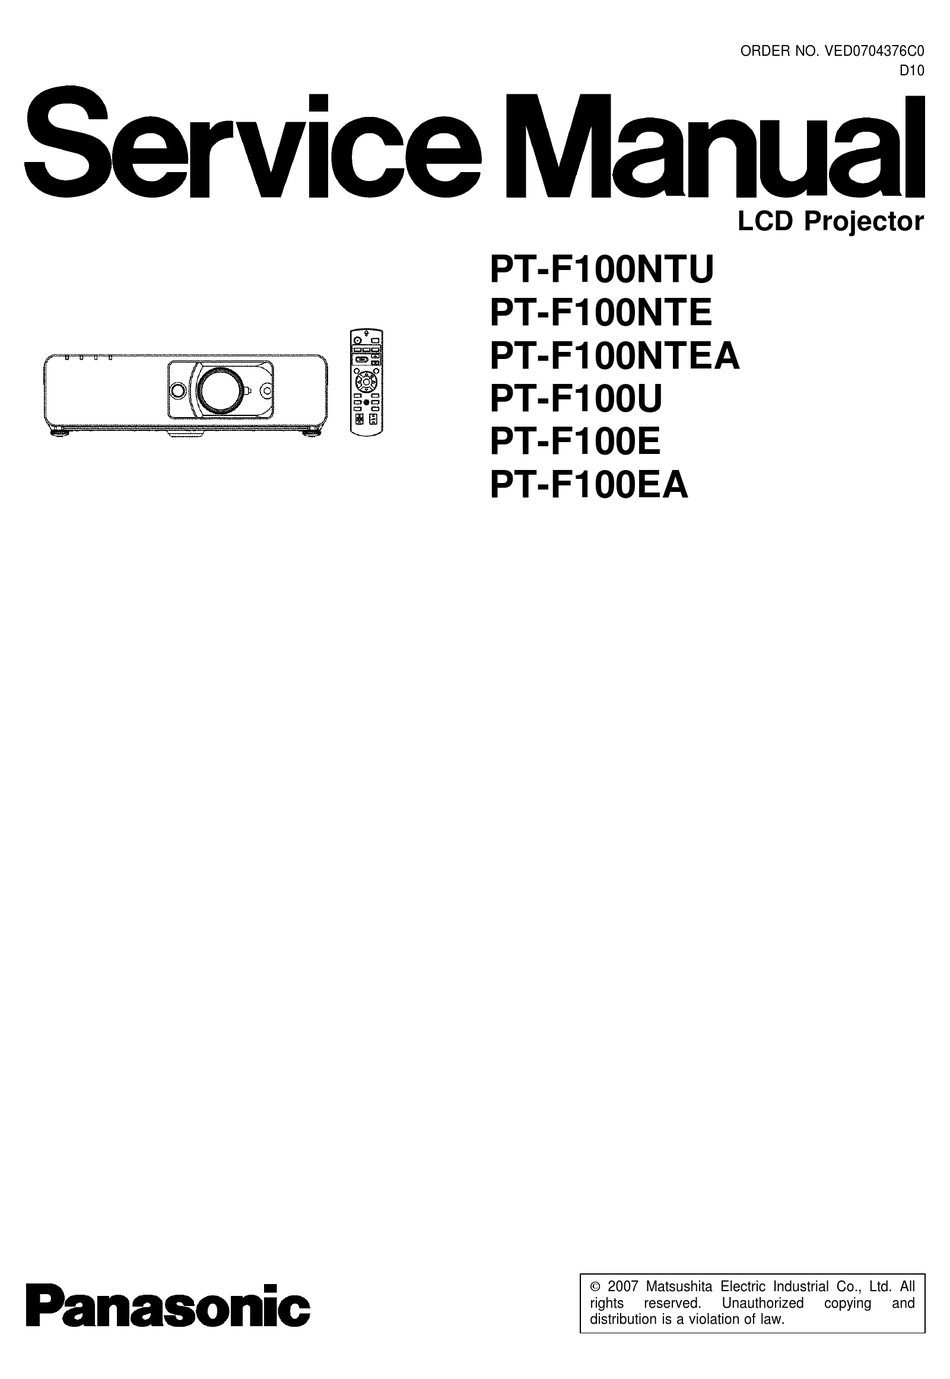 Panasonic PT-F100NTU LCD Projector for sale online 